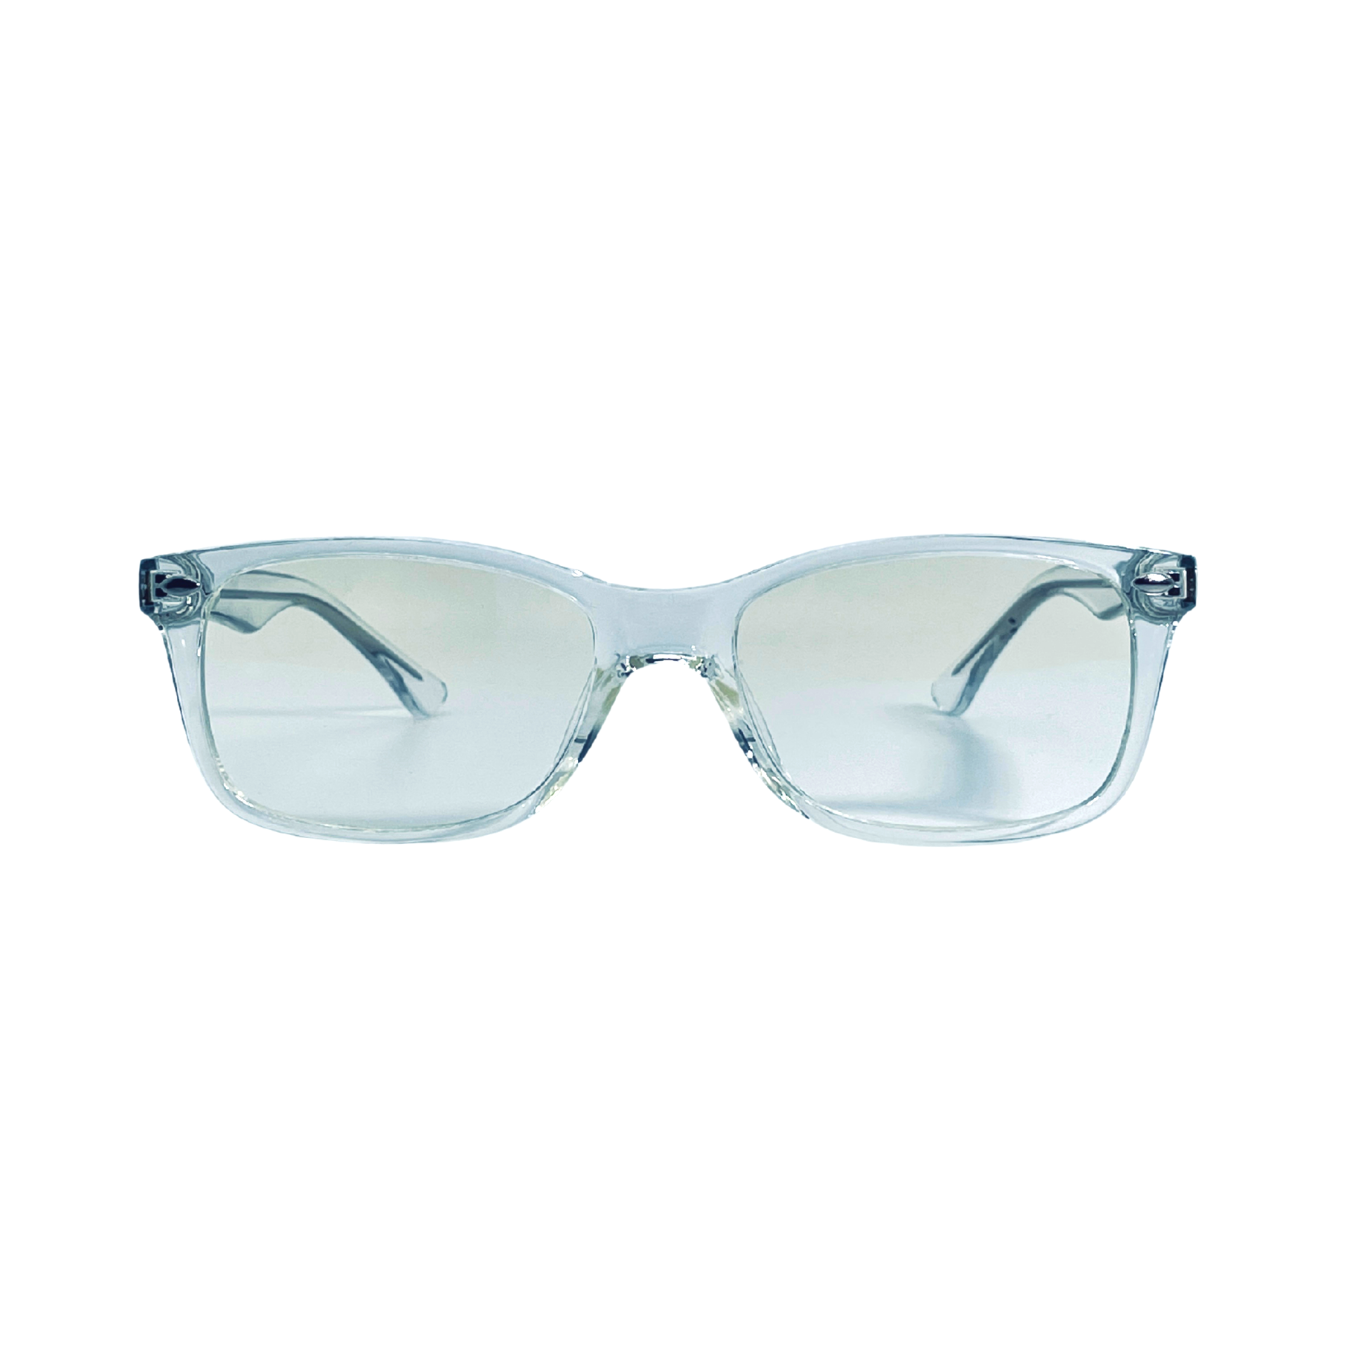 Trocadero II  Blue Light Glasses - Woodensun Sunglasses | Eco-fashion eyewear